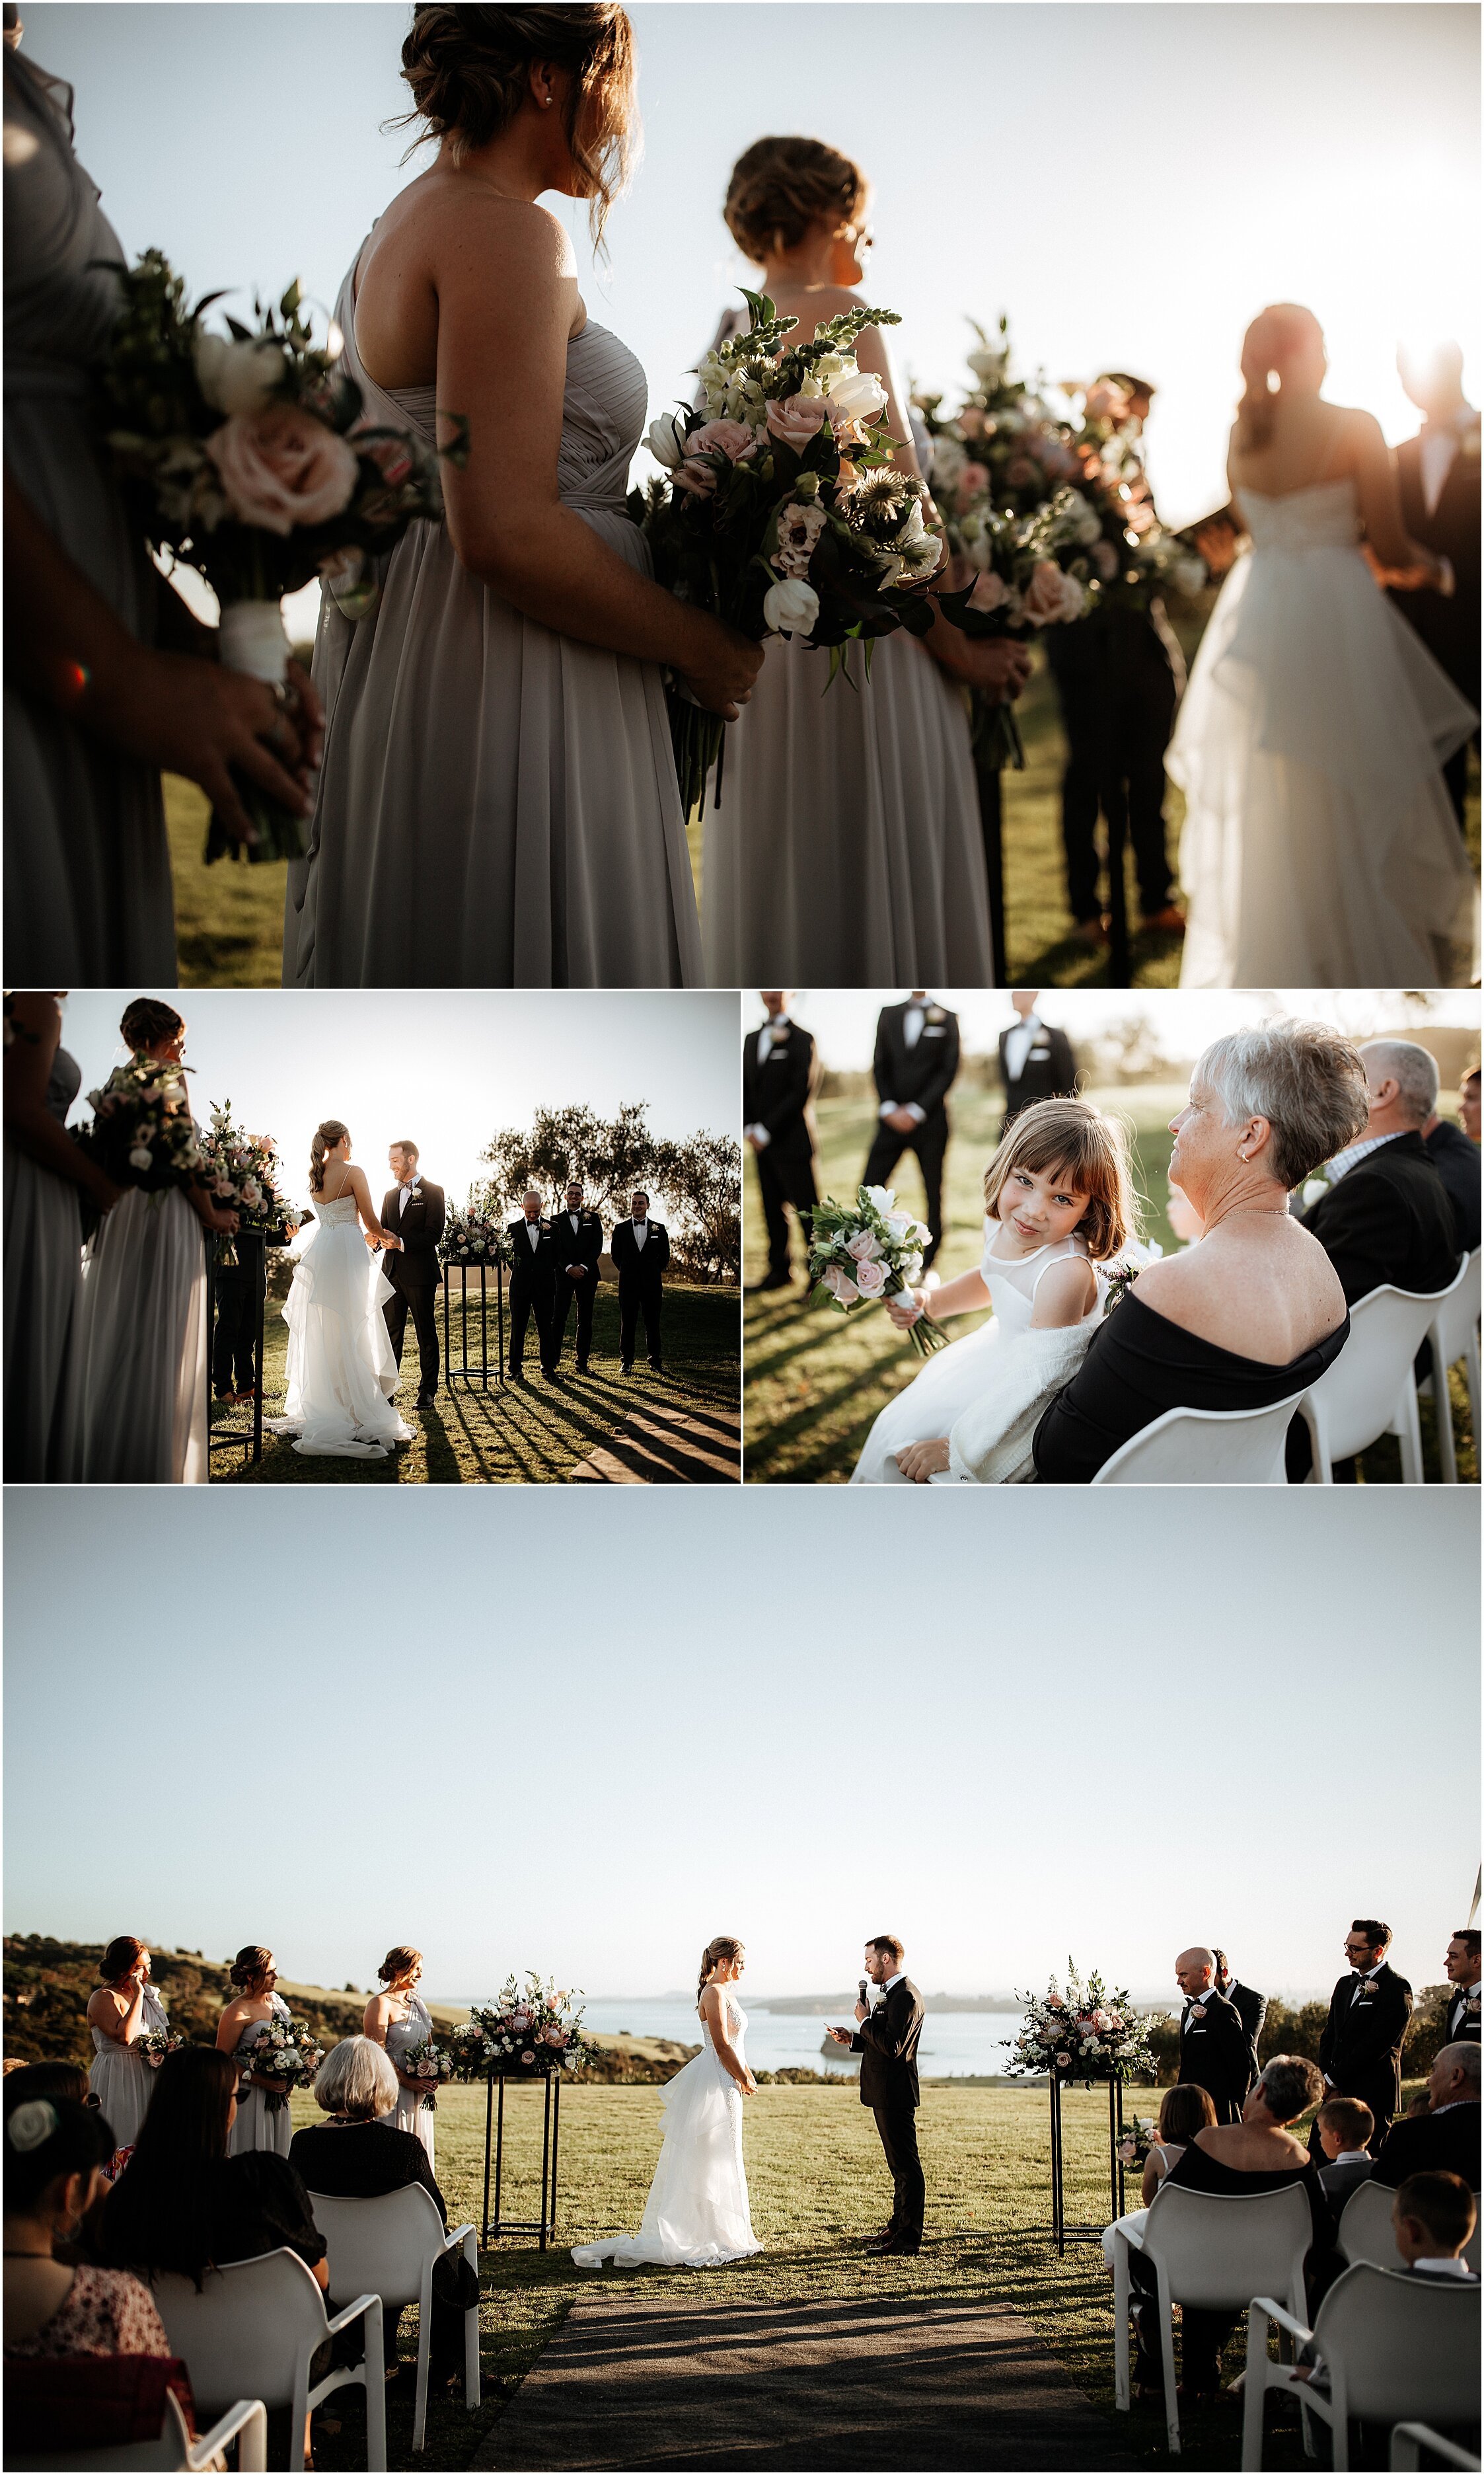 Zanda+Auckland+wedding+photographer+chic+vibrant+Cable+Bay+vineyard+venue+Waiheke+Island+New+Zealand_40.jpeg